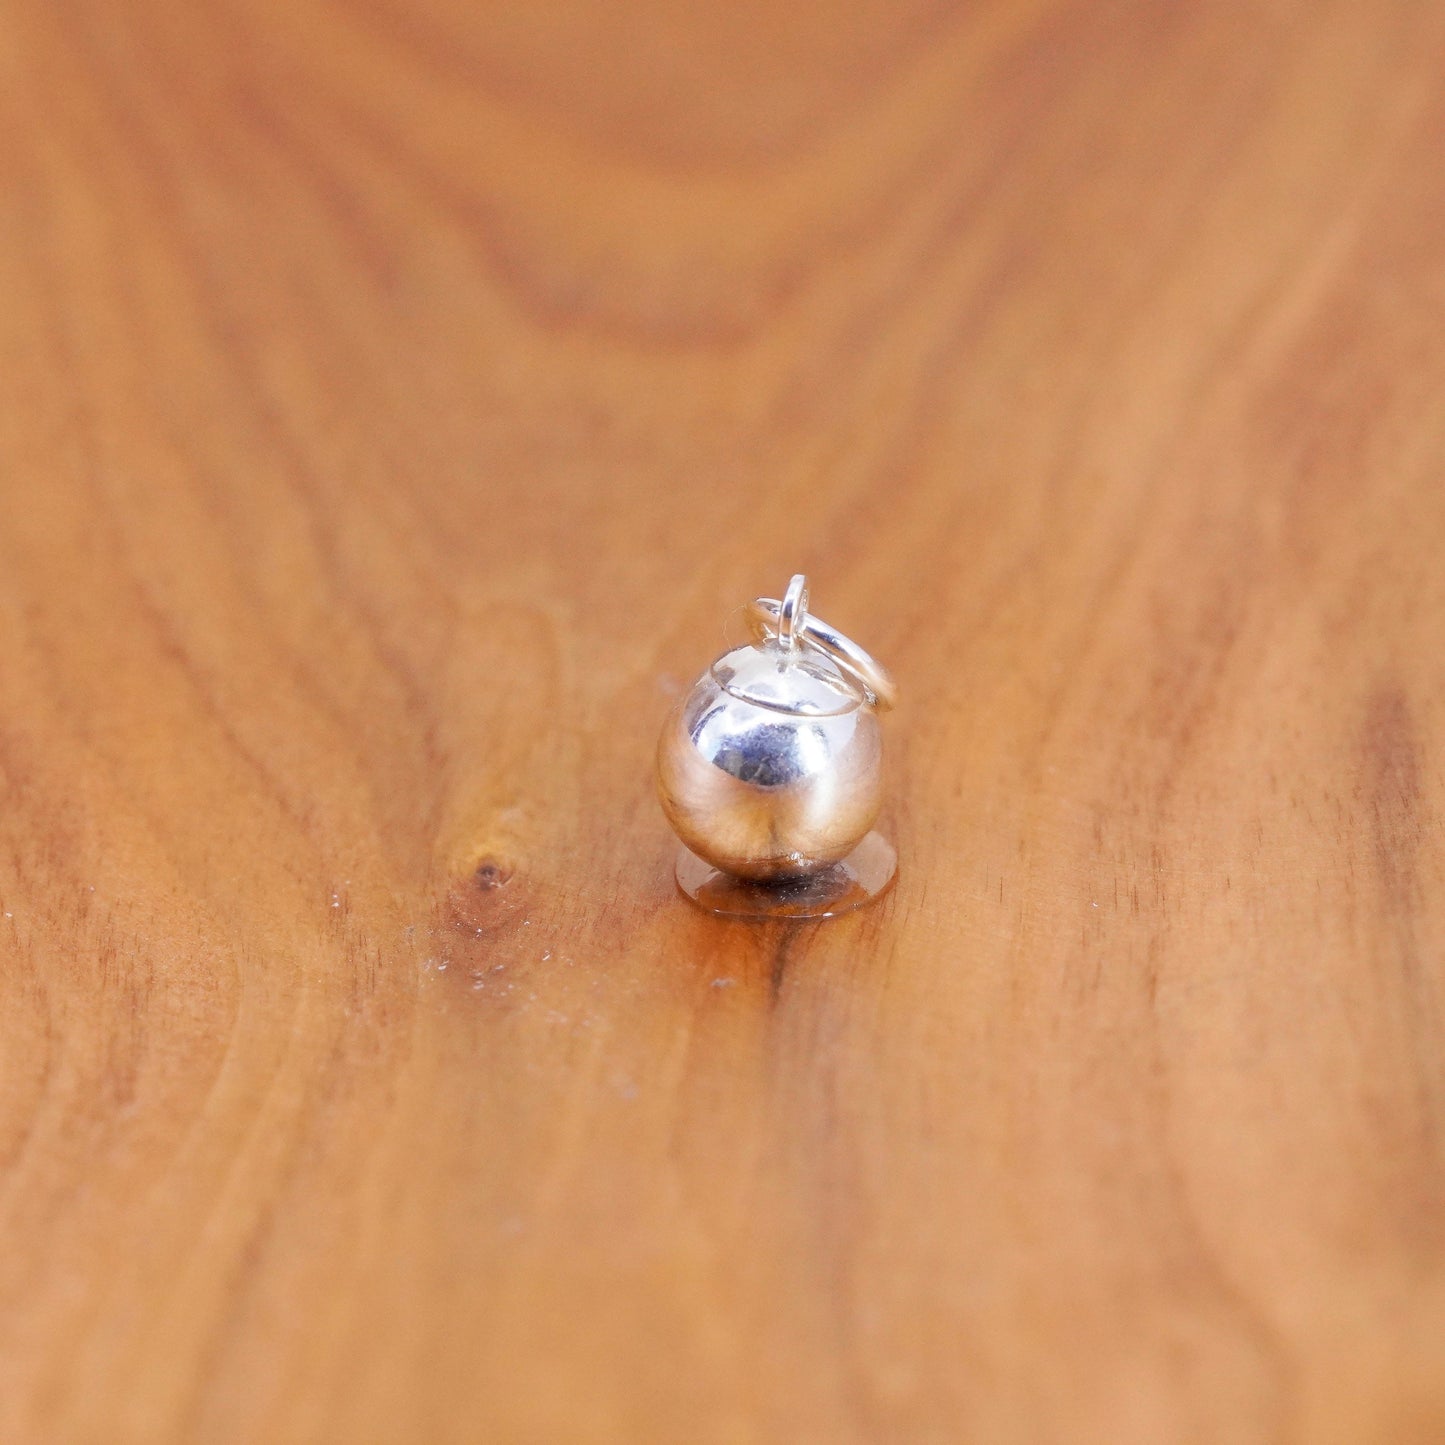 Vintage Sterling silver handmade pendant, 925 bead charm